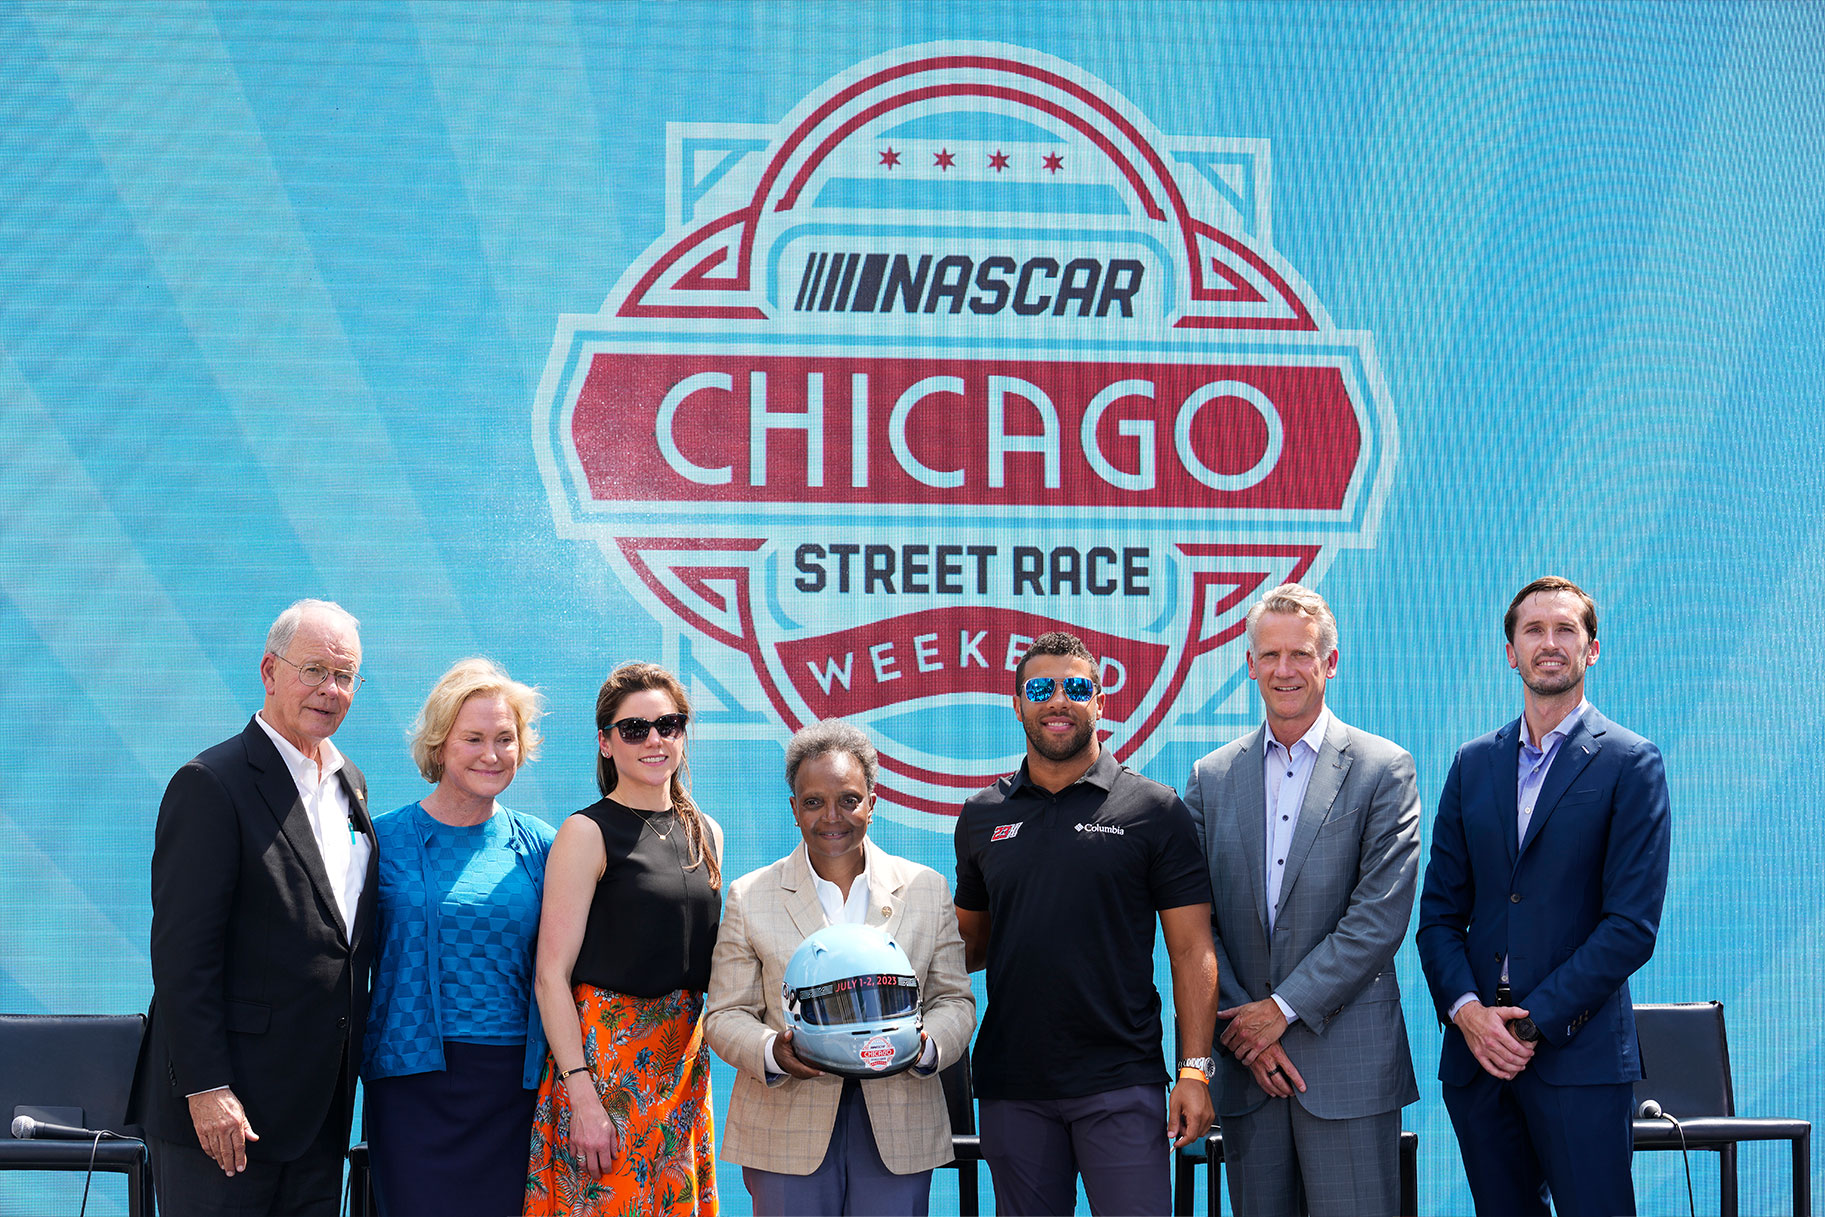 Nascar Chicago Street Race